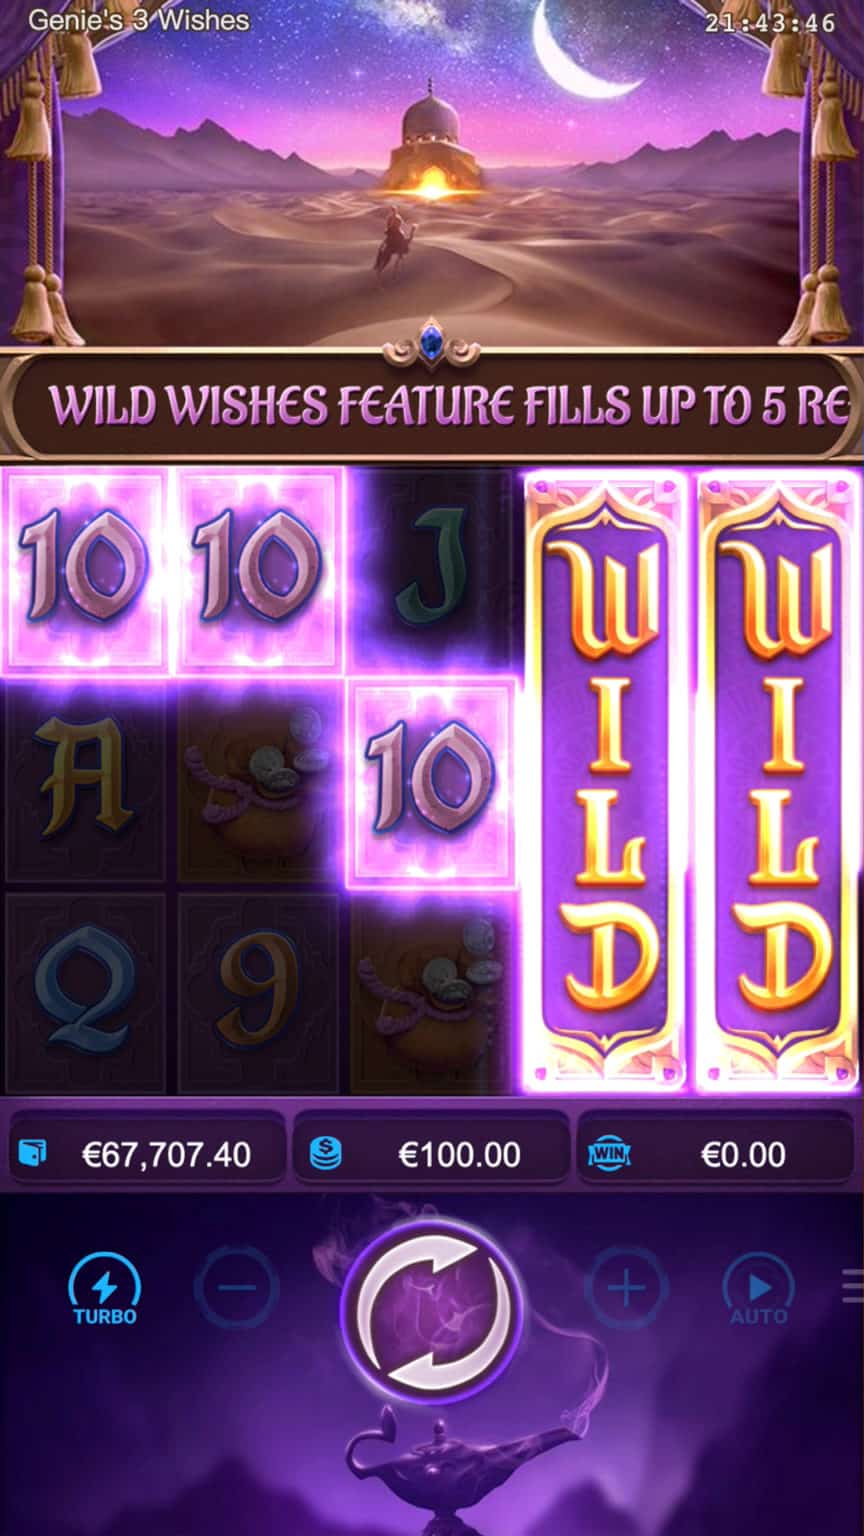 genies 3 wishes slot